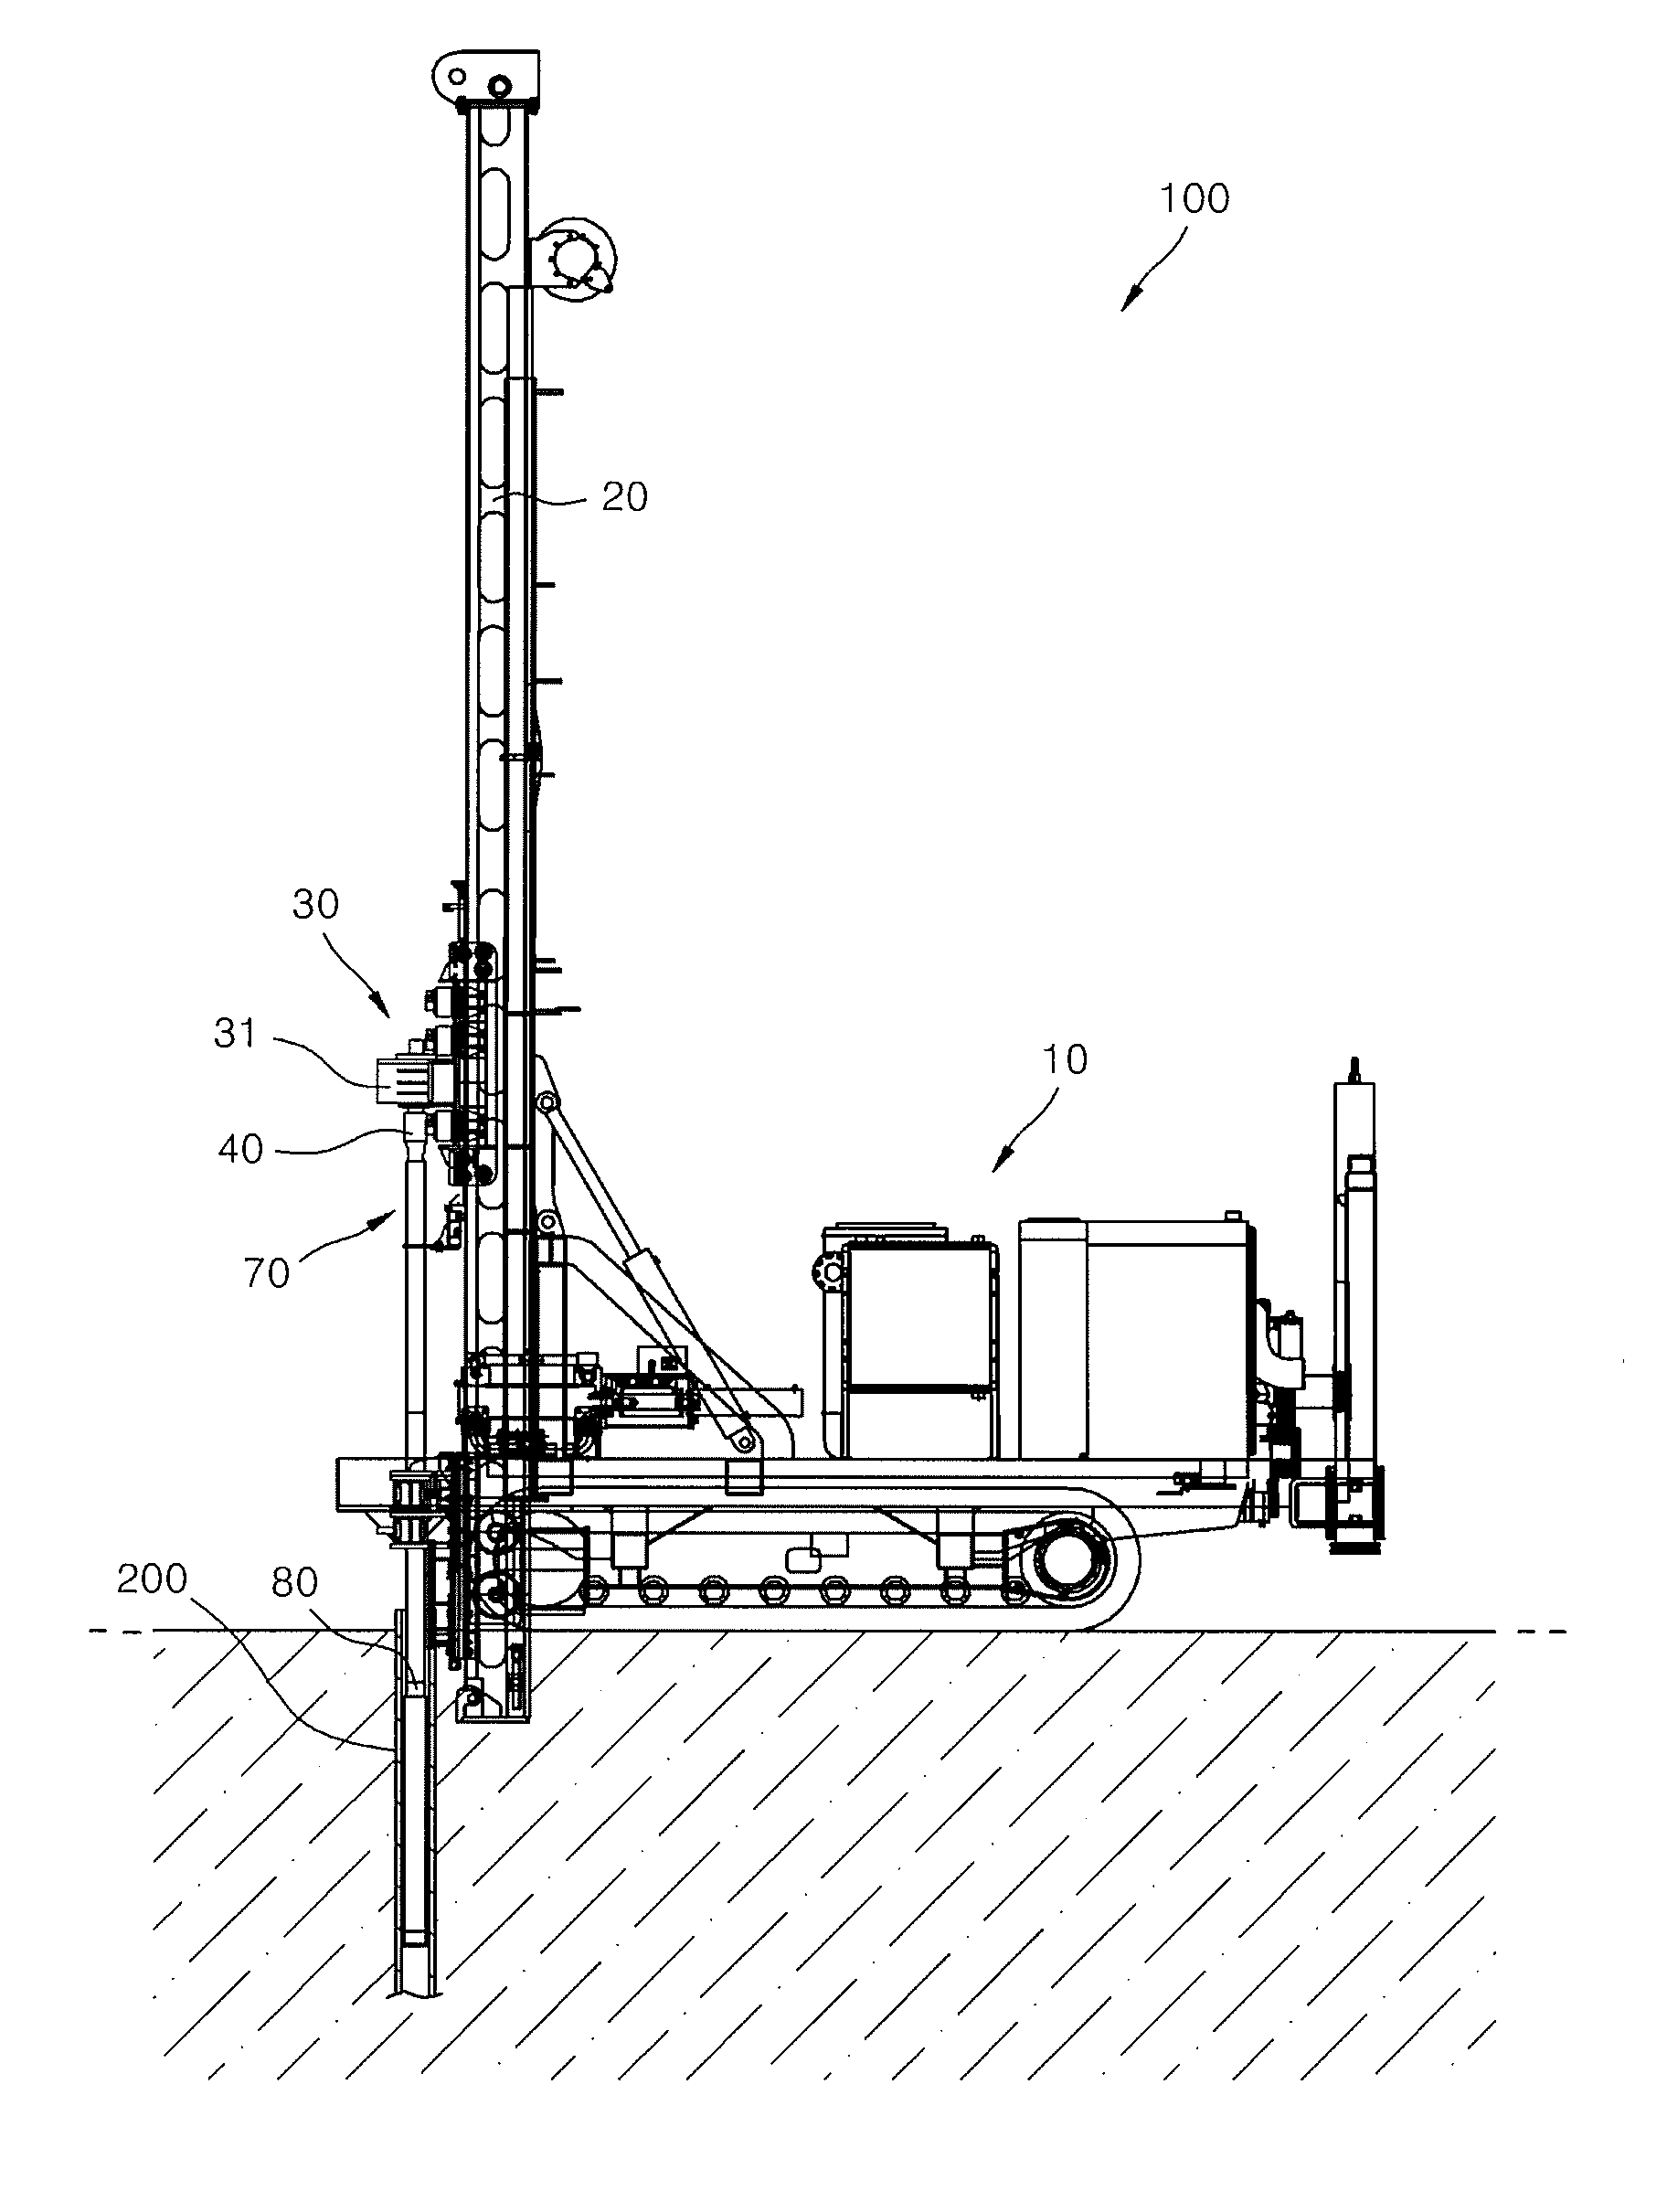 Drilling apparatus having head